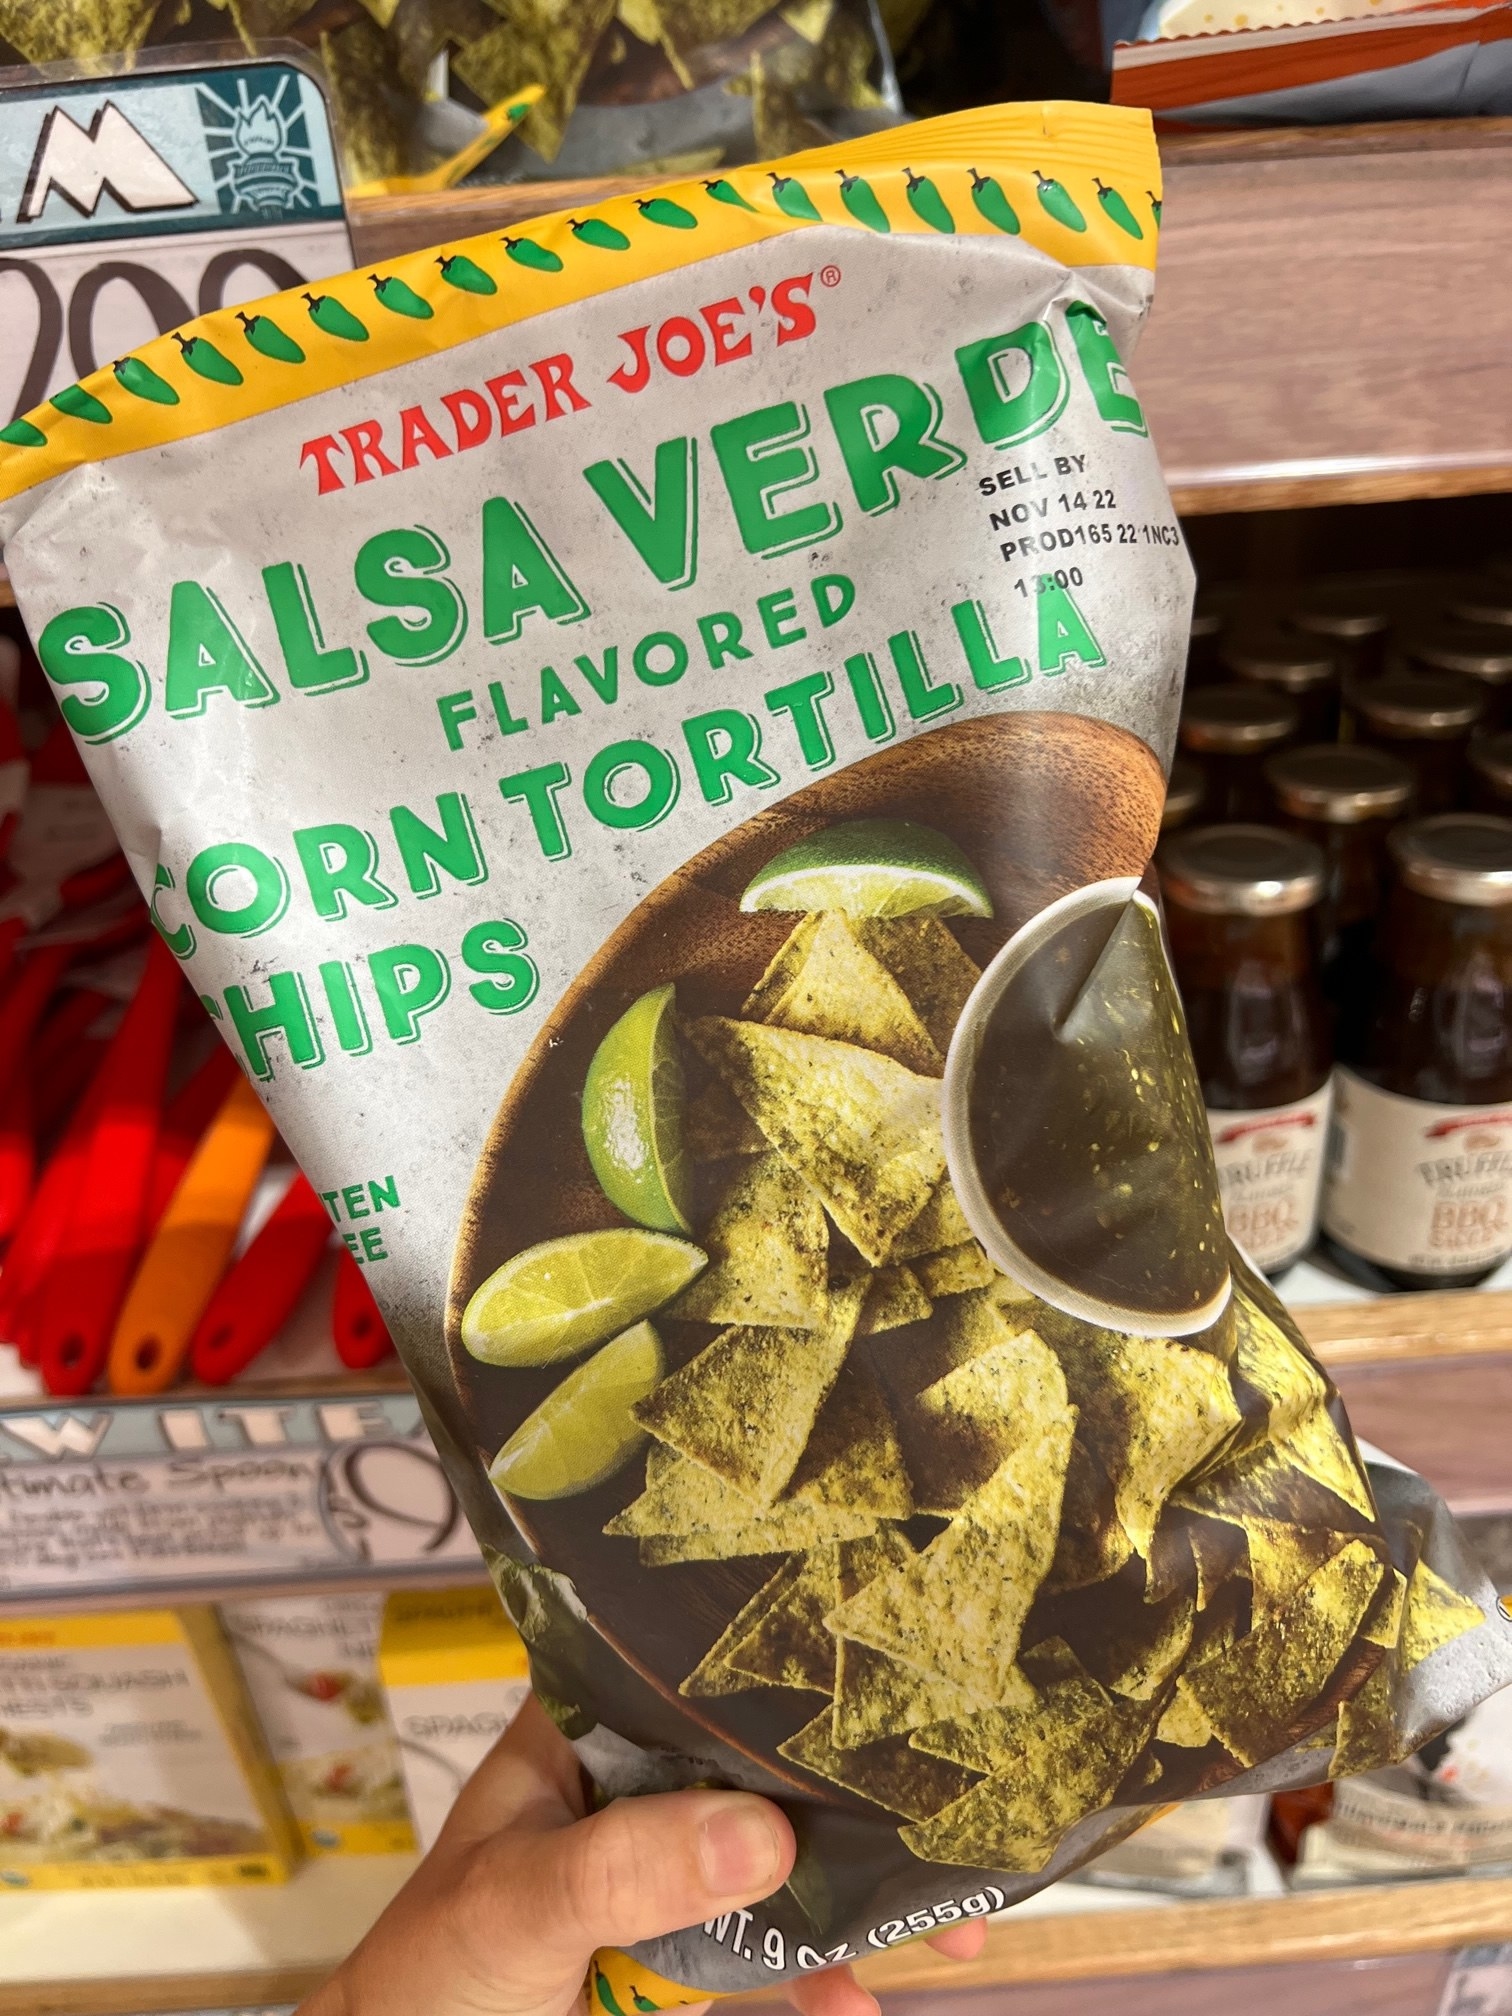 A bag of Salsa Verde Flavored Corn Tortilla Chips